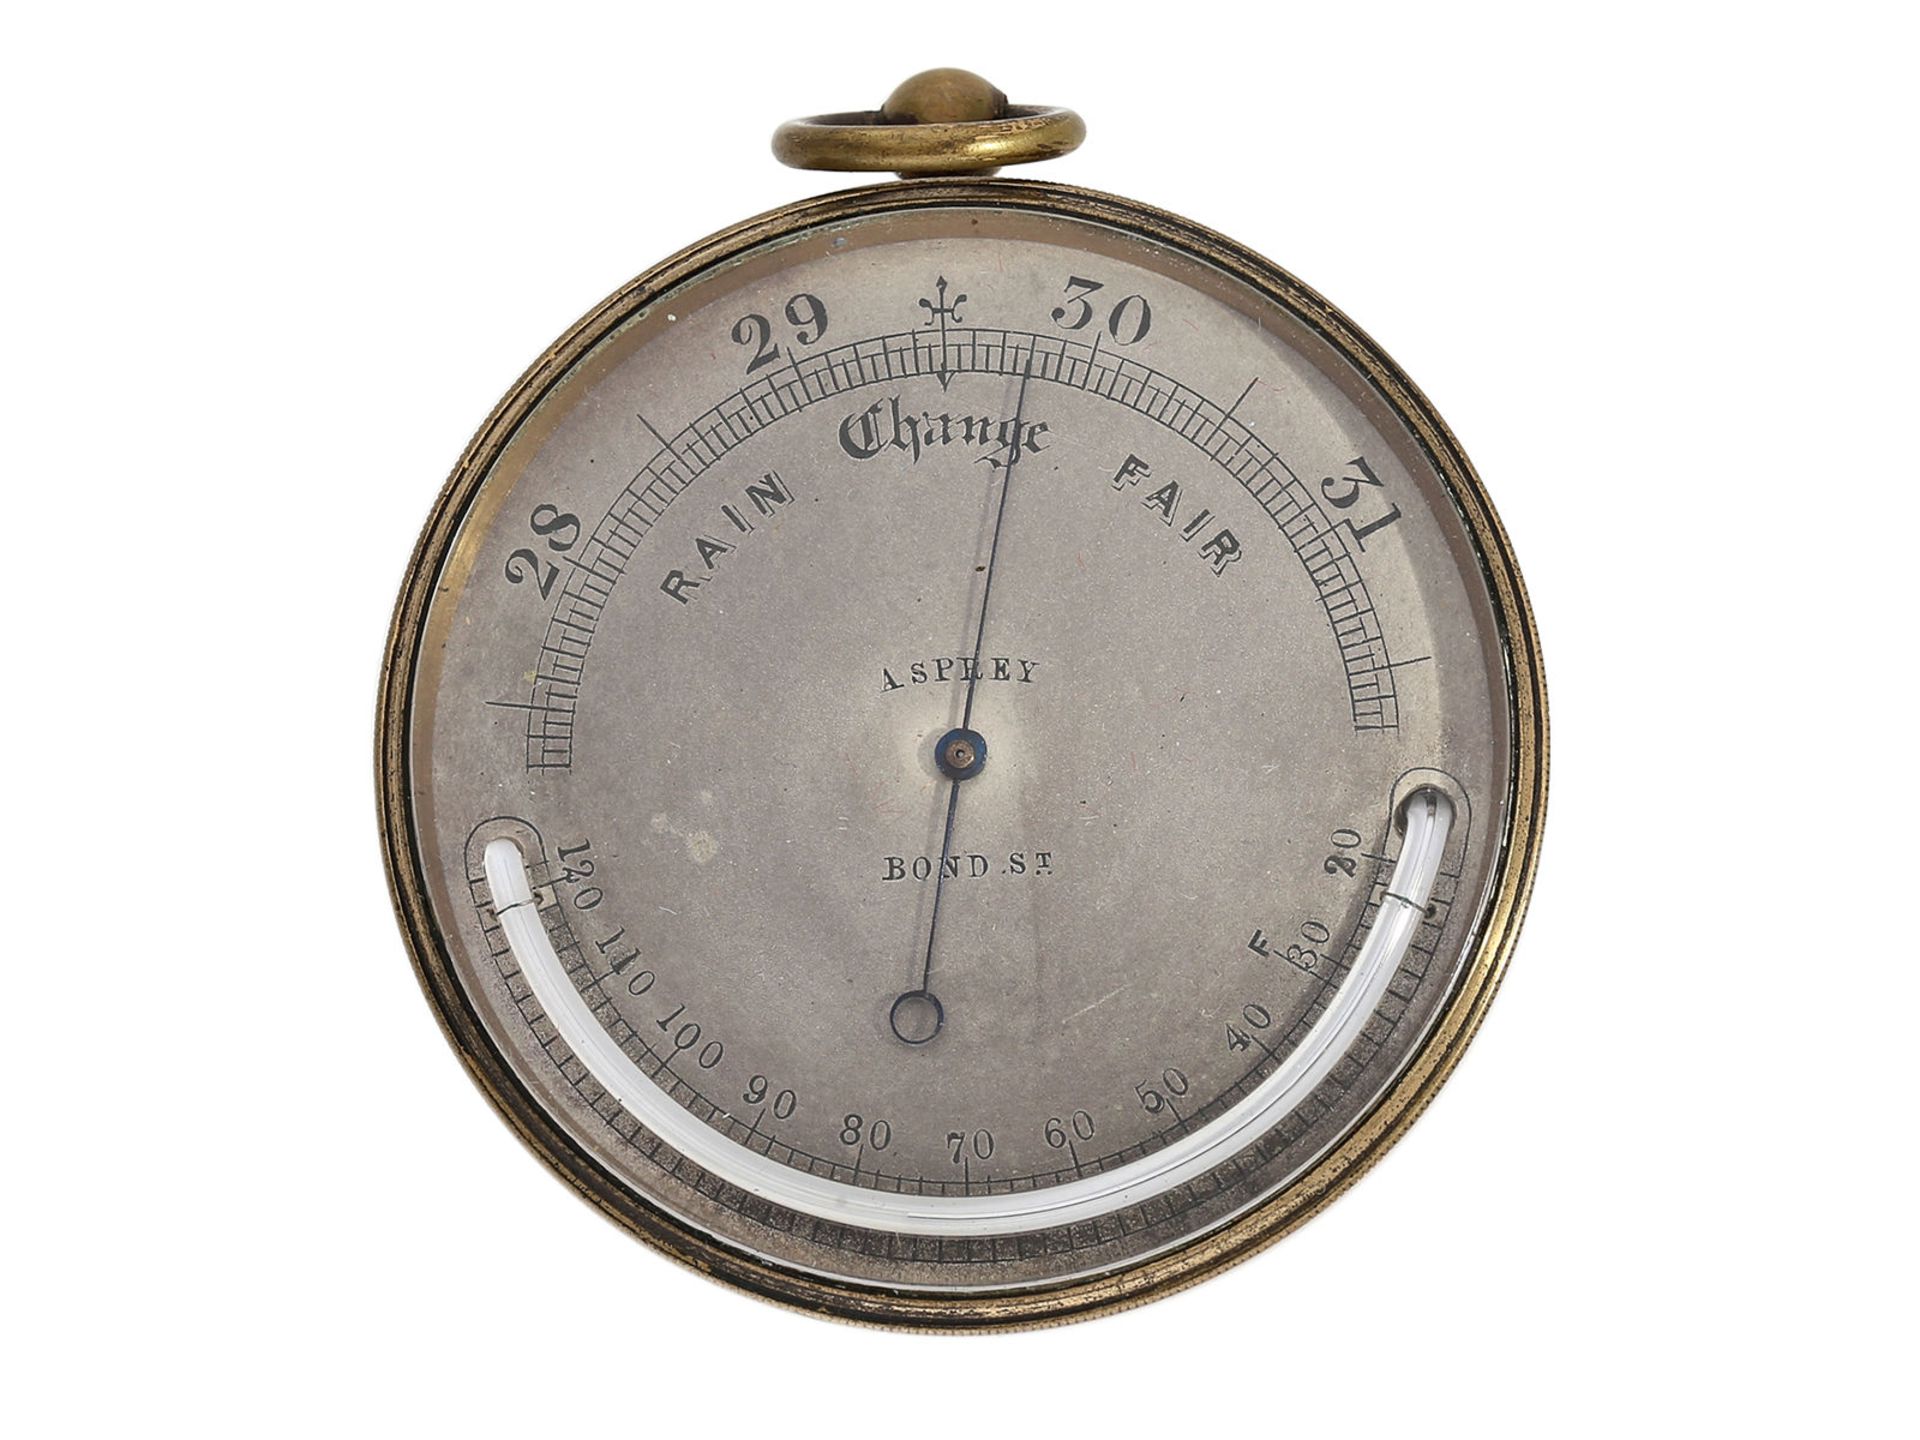 Taschenbarometer/Thermometer/Kompass: Konvolut aus einem Taschenbarometer und einem Taschenkompa - Image 3 of 4